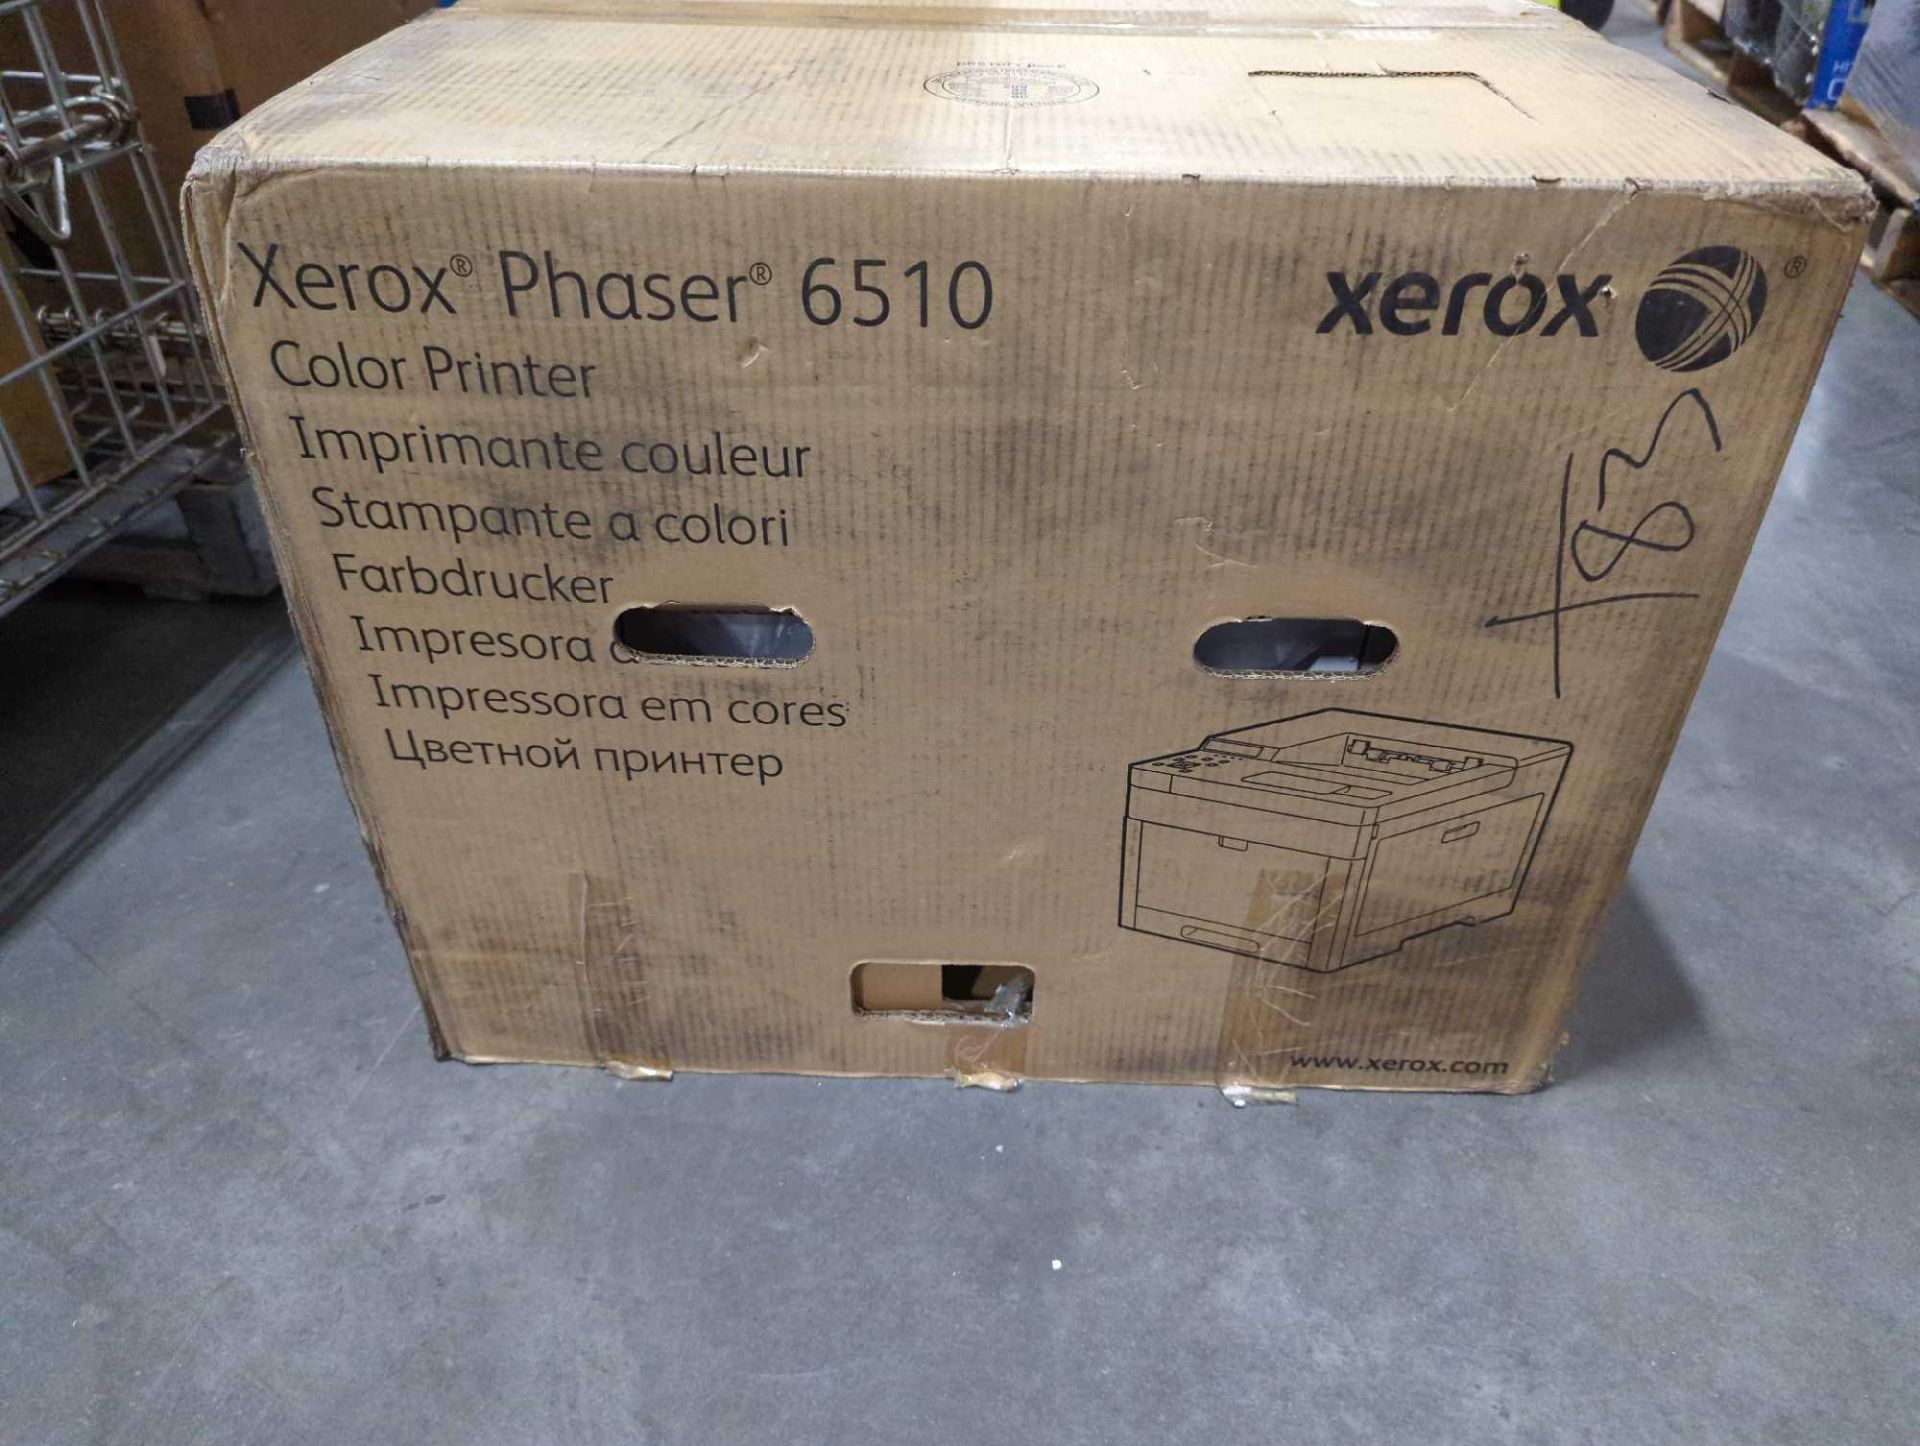 Kodak i4850/dysons/vacuums/xerox - Image 11 of 13